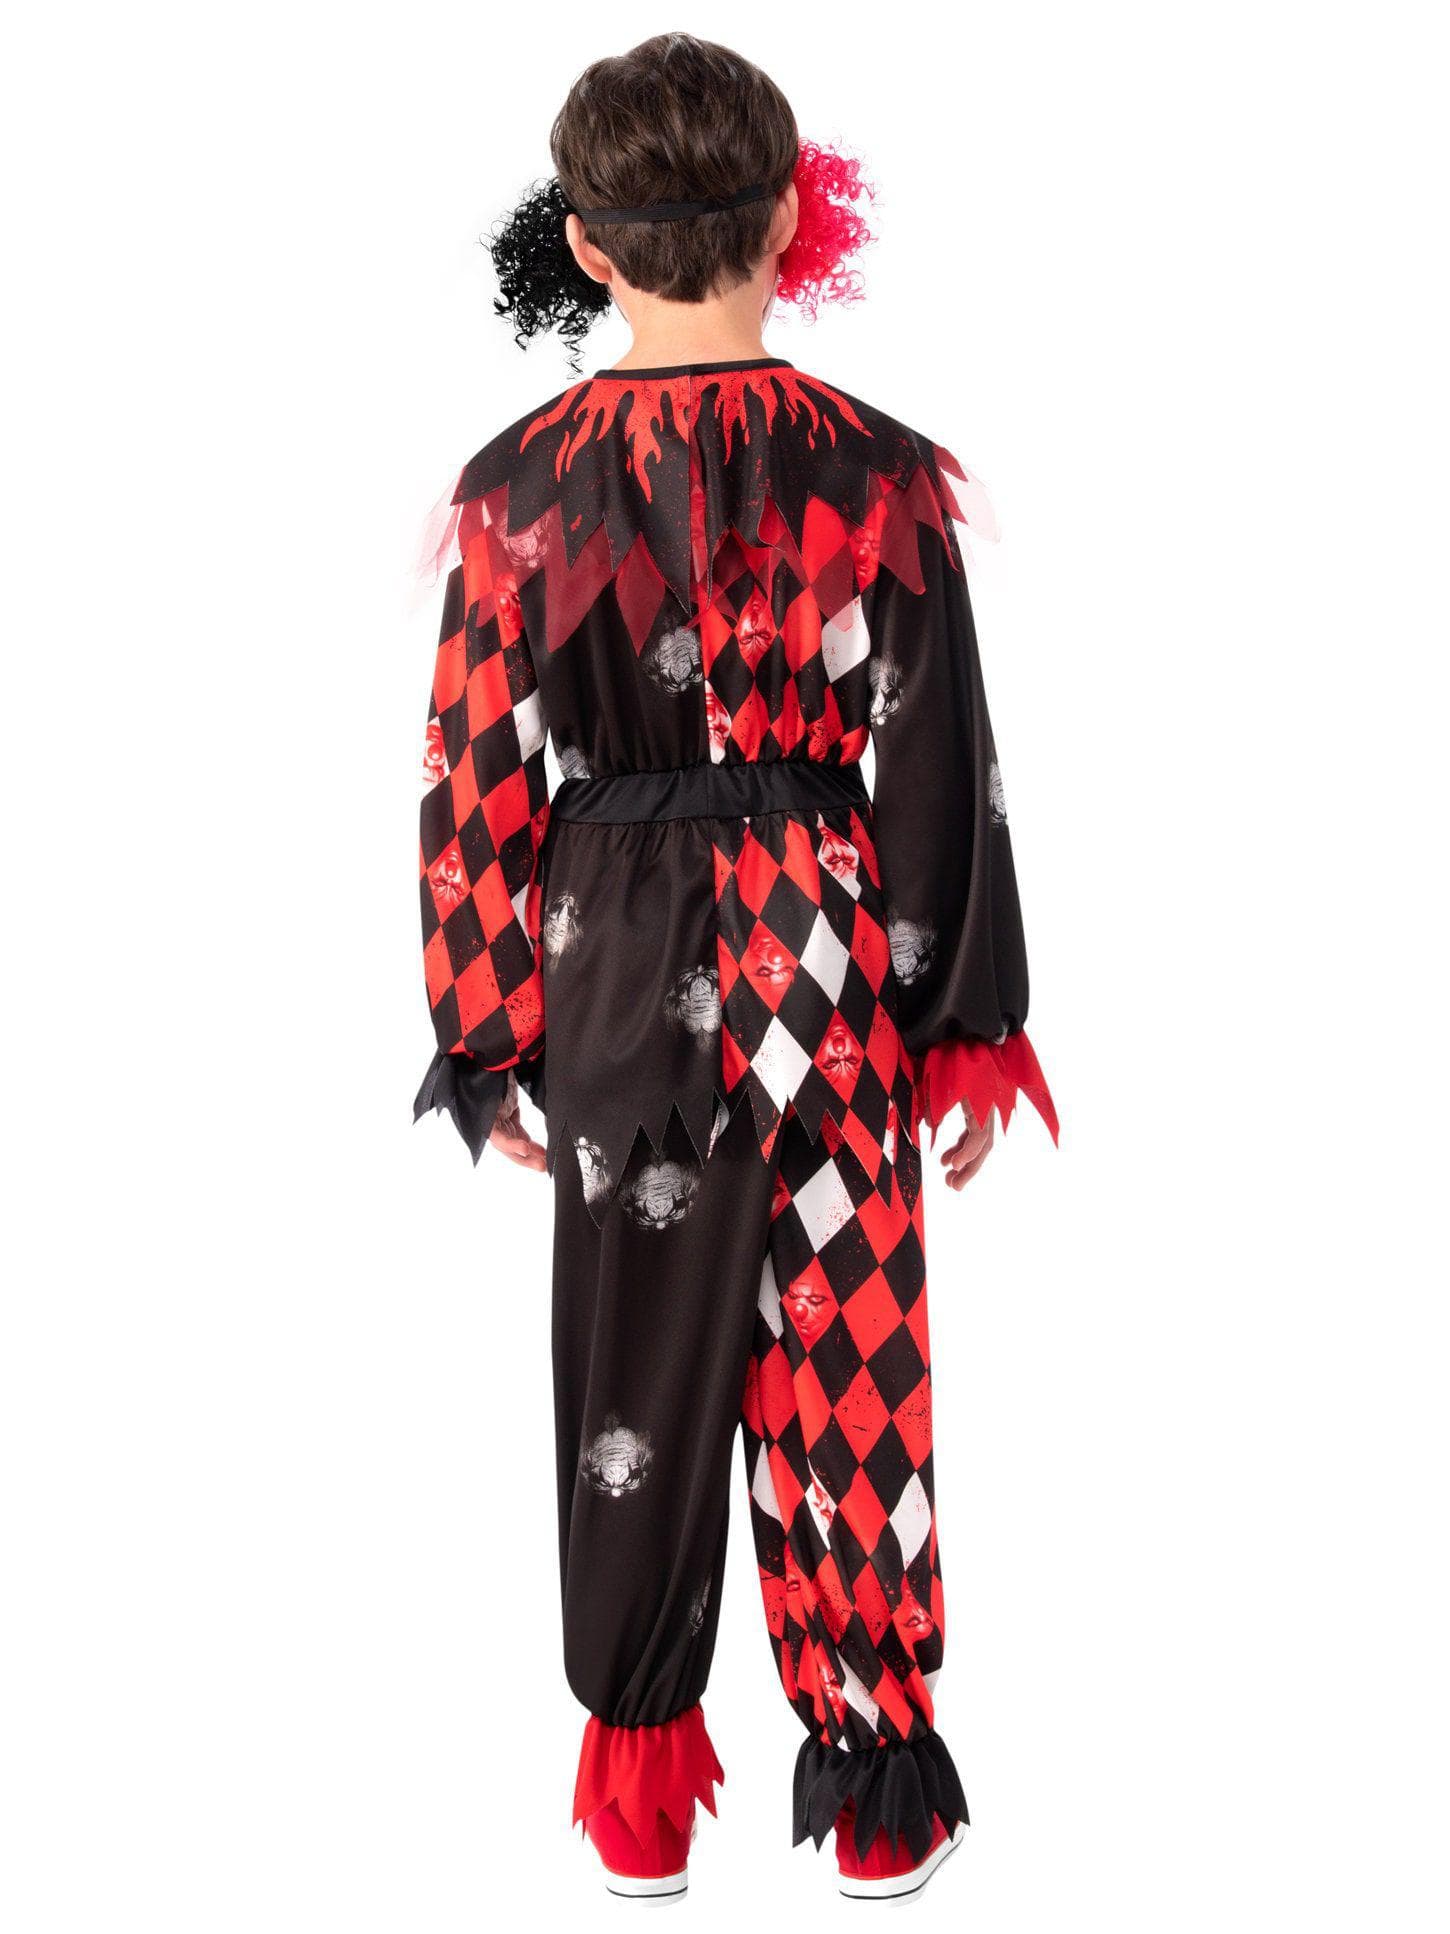 Kids Scary Clown Costume - costumes.com